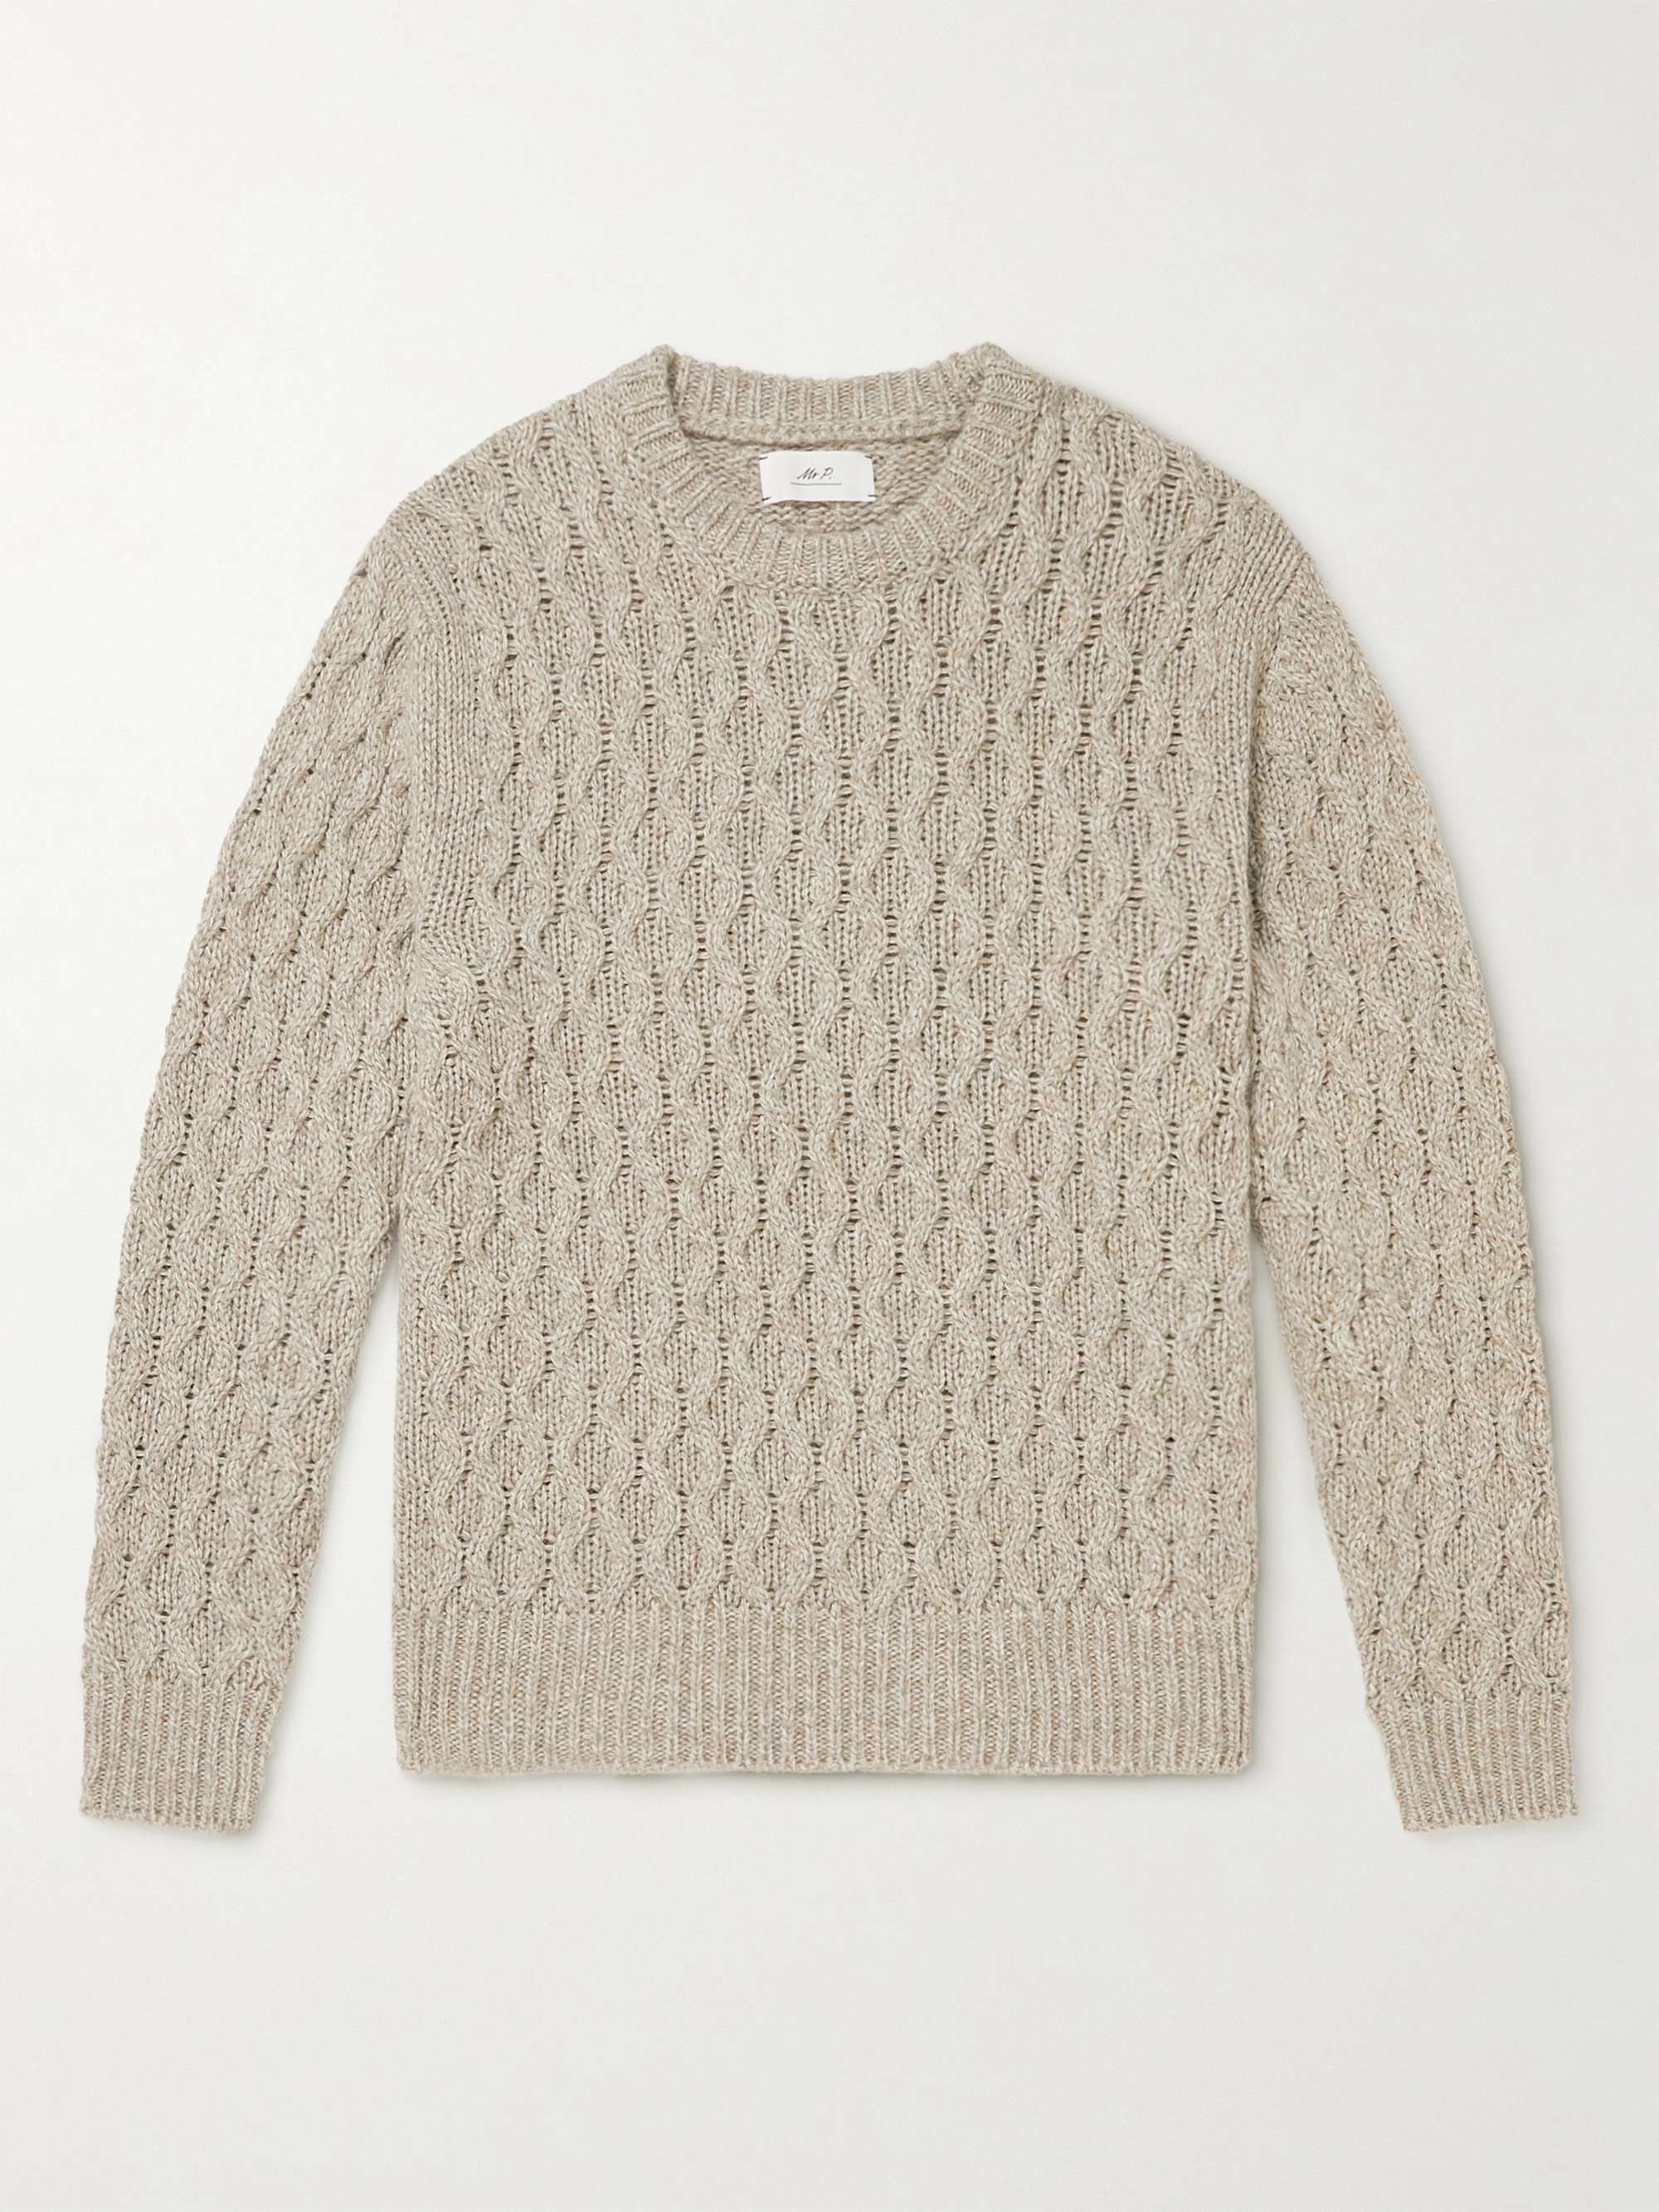 MR P. Slim-Fit Cable-Knit Alpaca-Blend Sweater